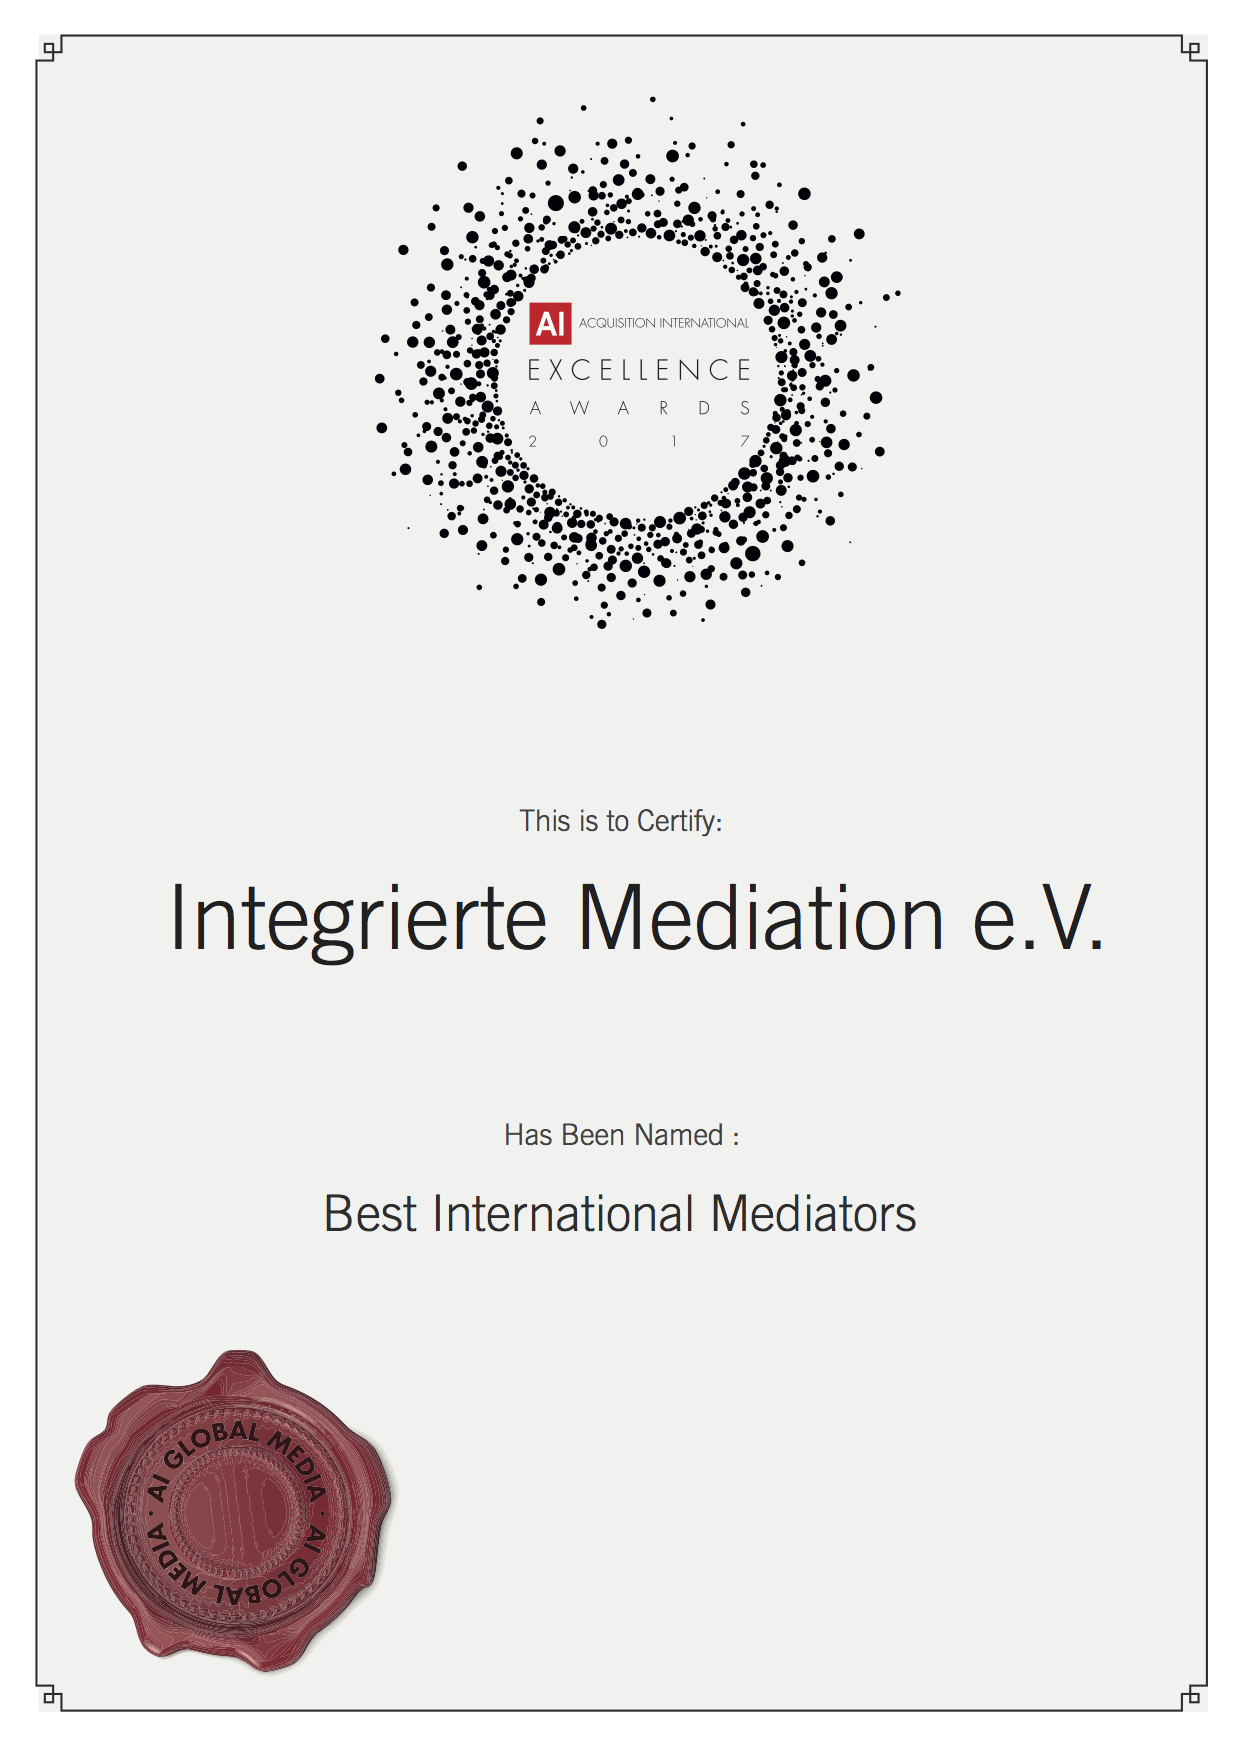 Best International Mediators